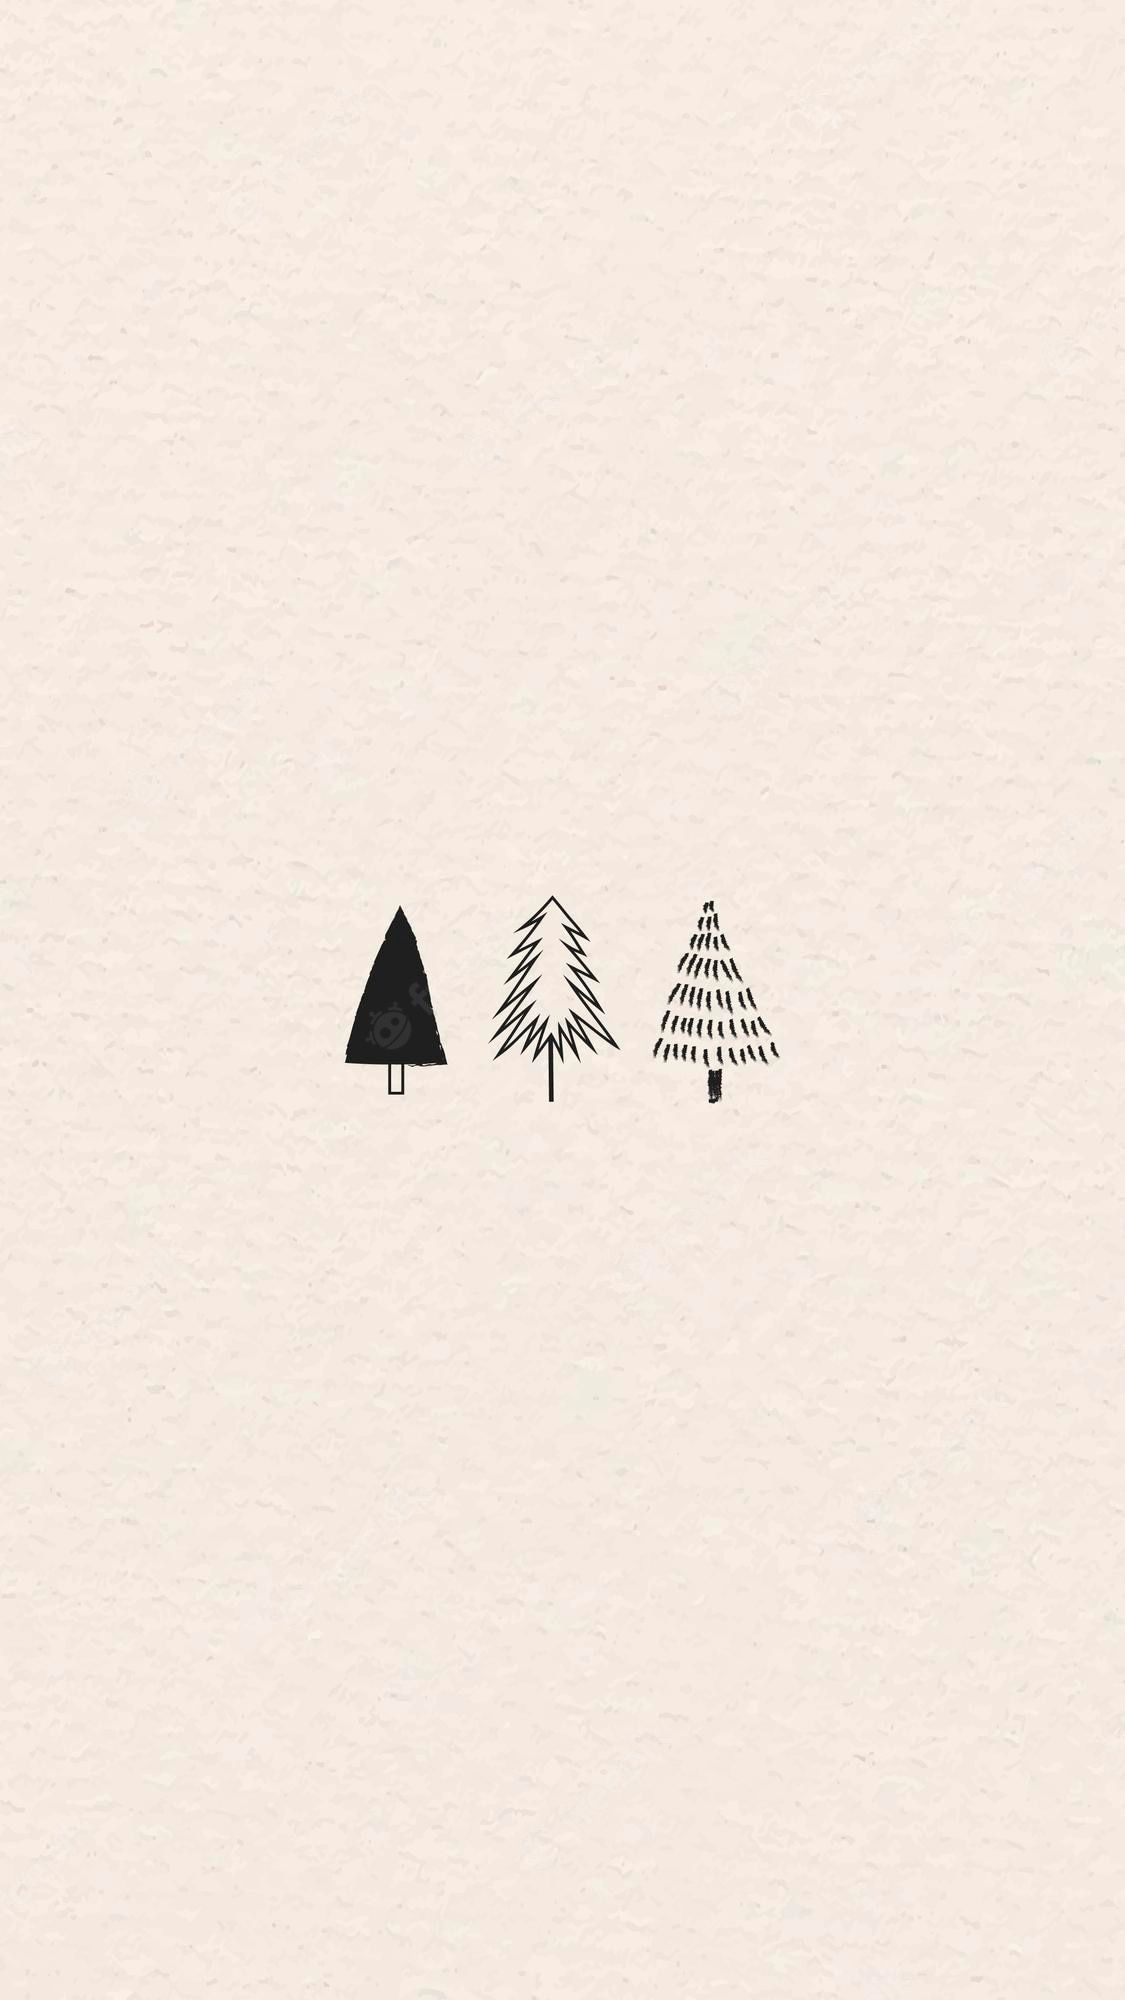 Three Christmas trees on a light beige background - Cute Christmas, Christmas